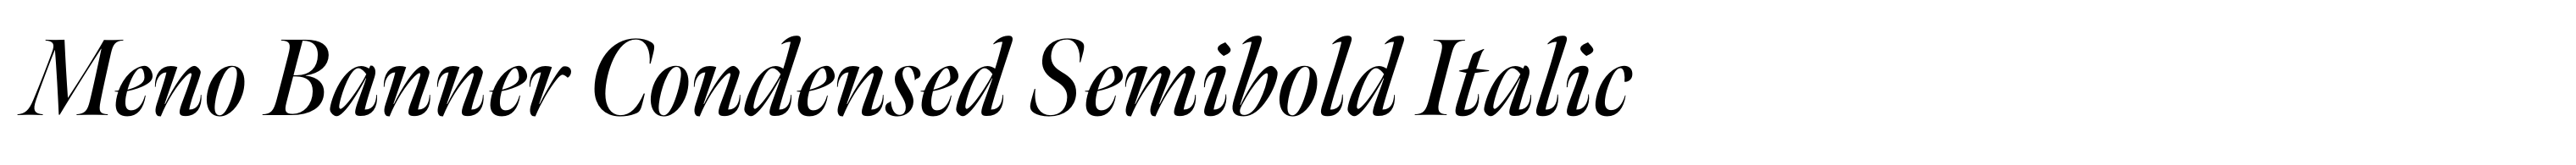 Meno Banner Condensed Semibold Italic